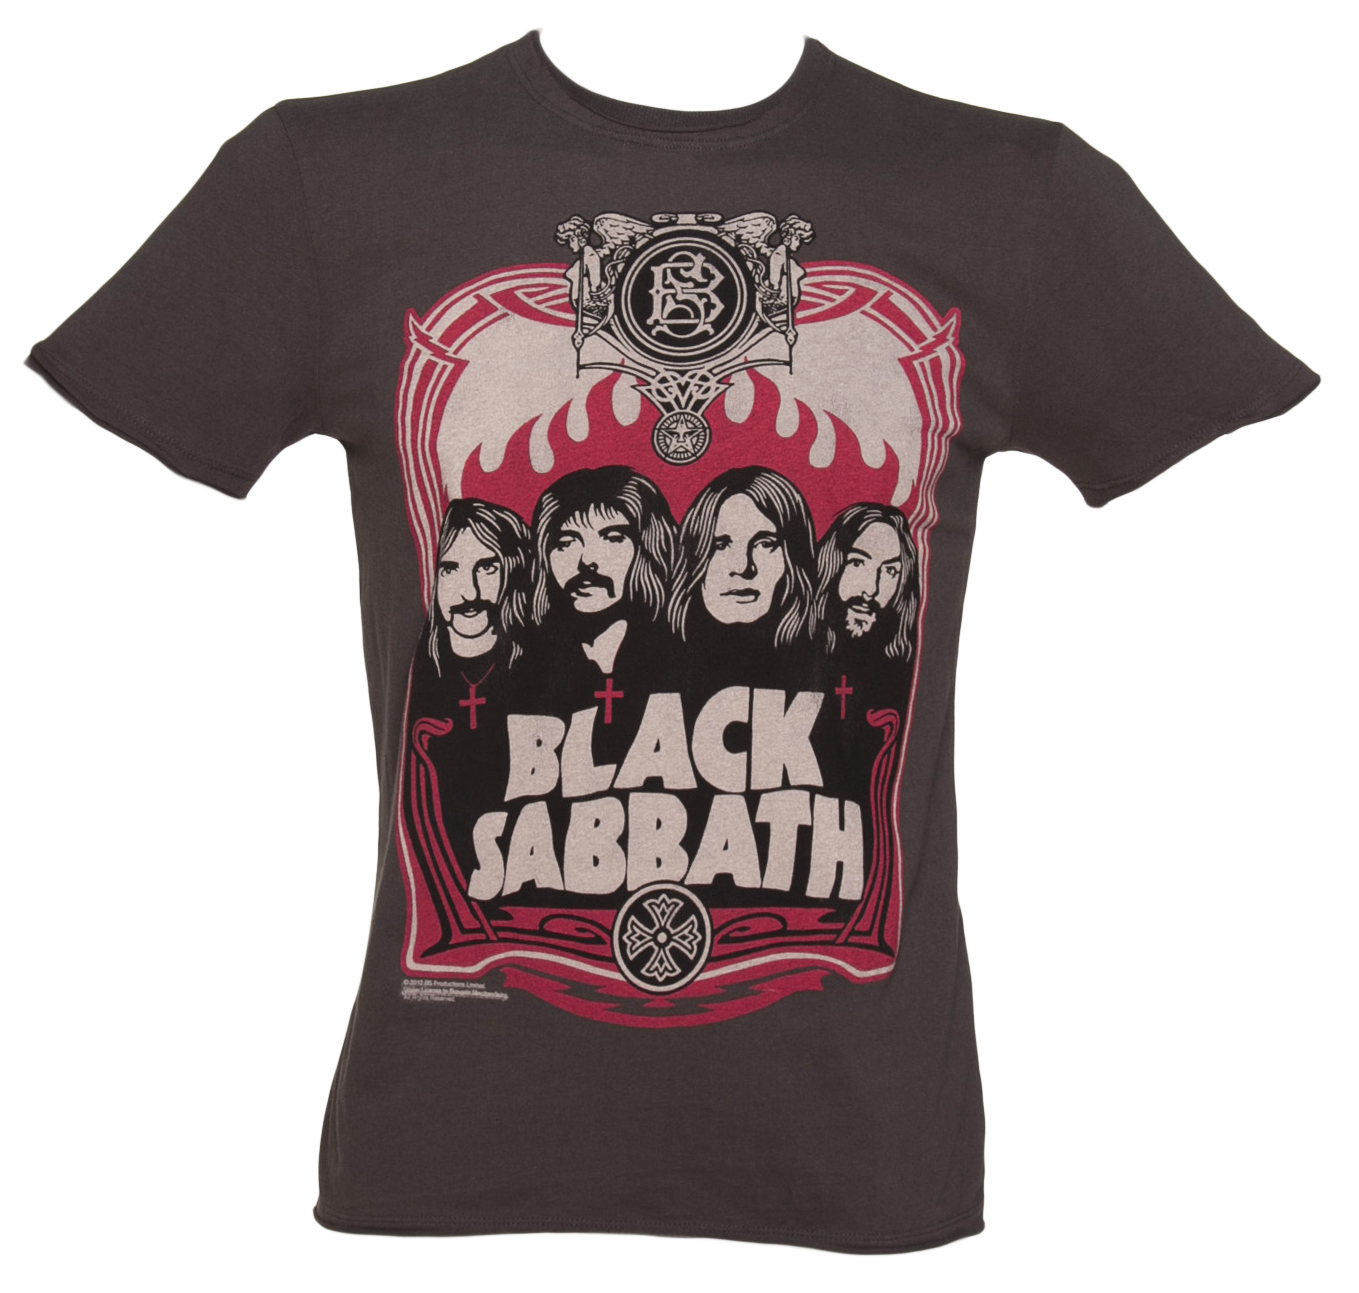 Mens_Charcoal_Black_Sabbath_T_Shirt_from_Amplified_Vintage_hi_res.jpg